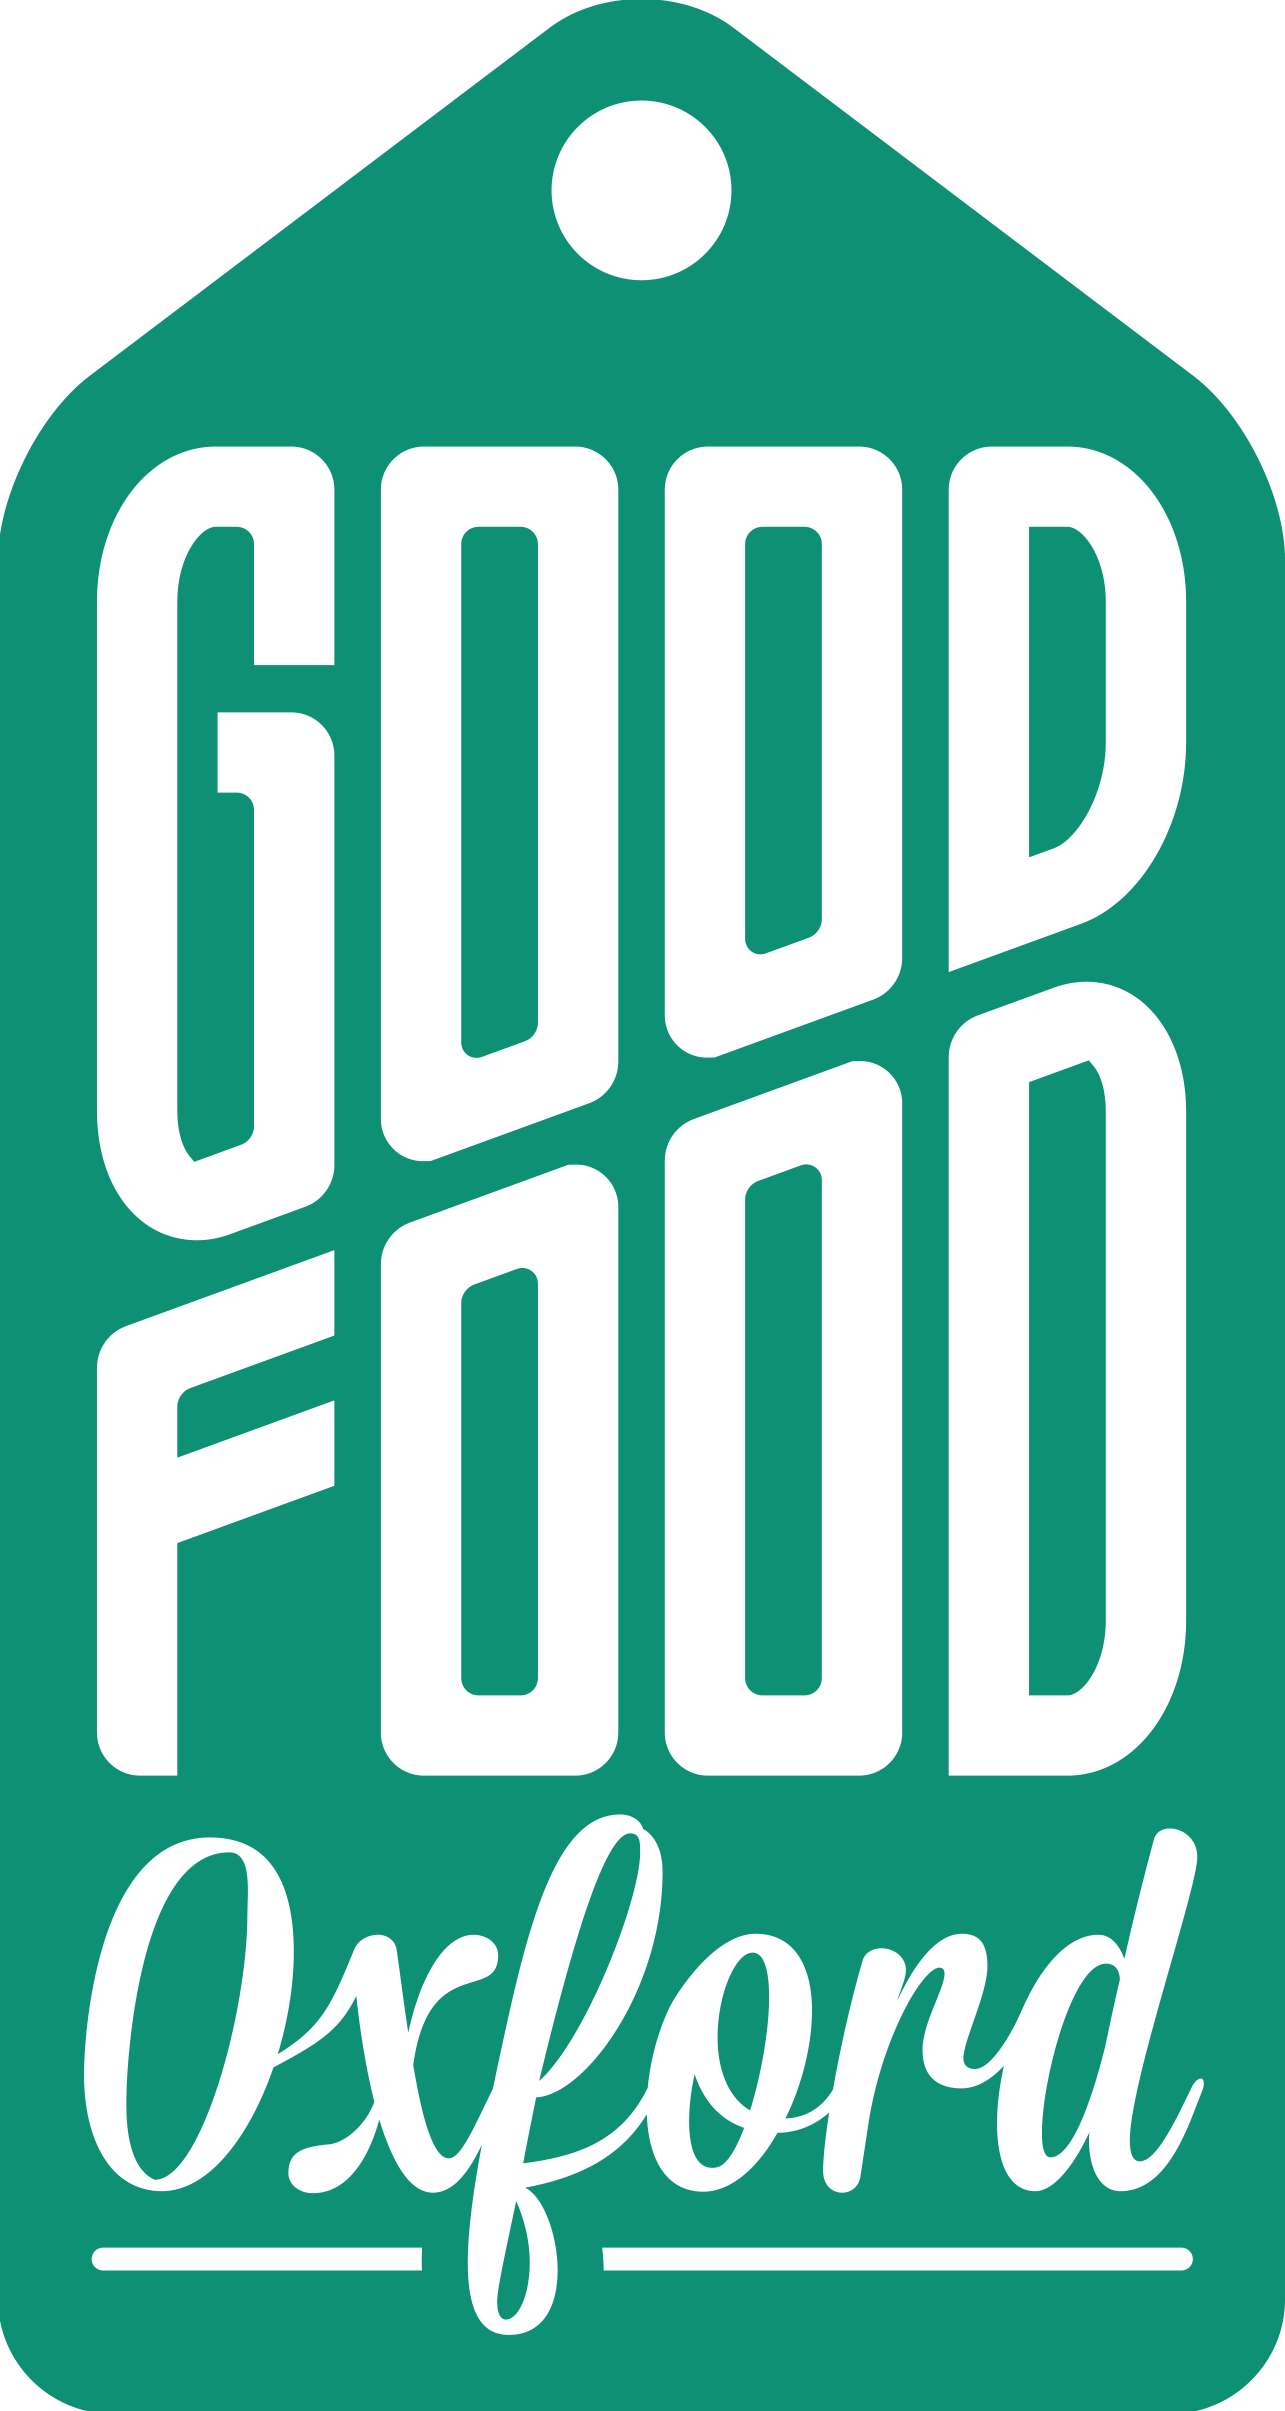 Good Food Oxford Logo 01 No White - Good Food Oxford (1285x2411)